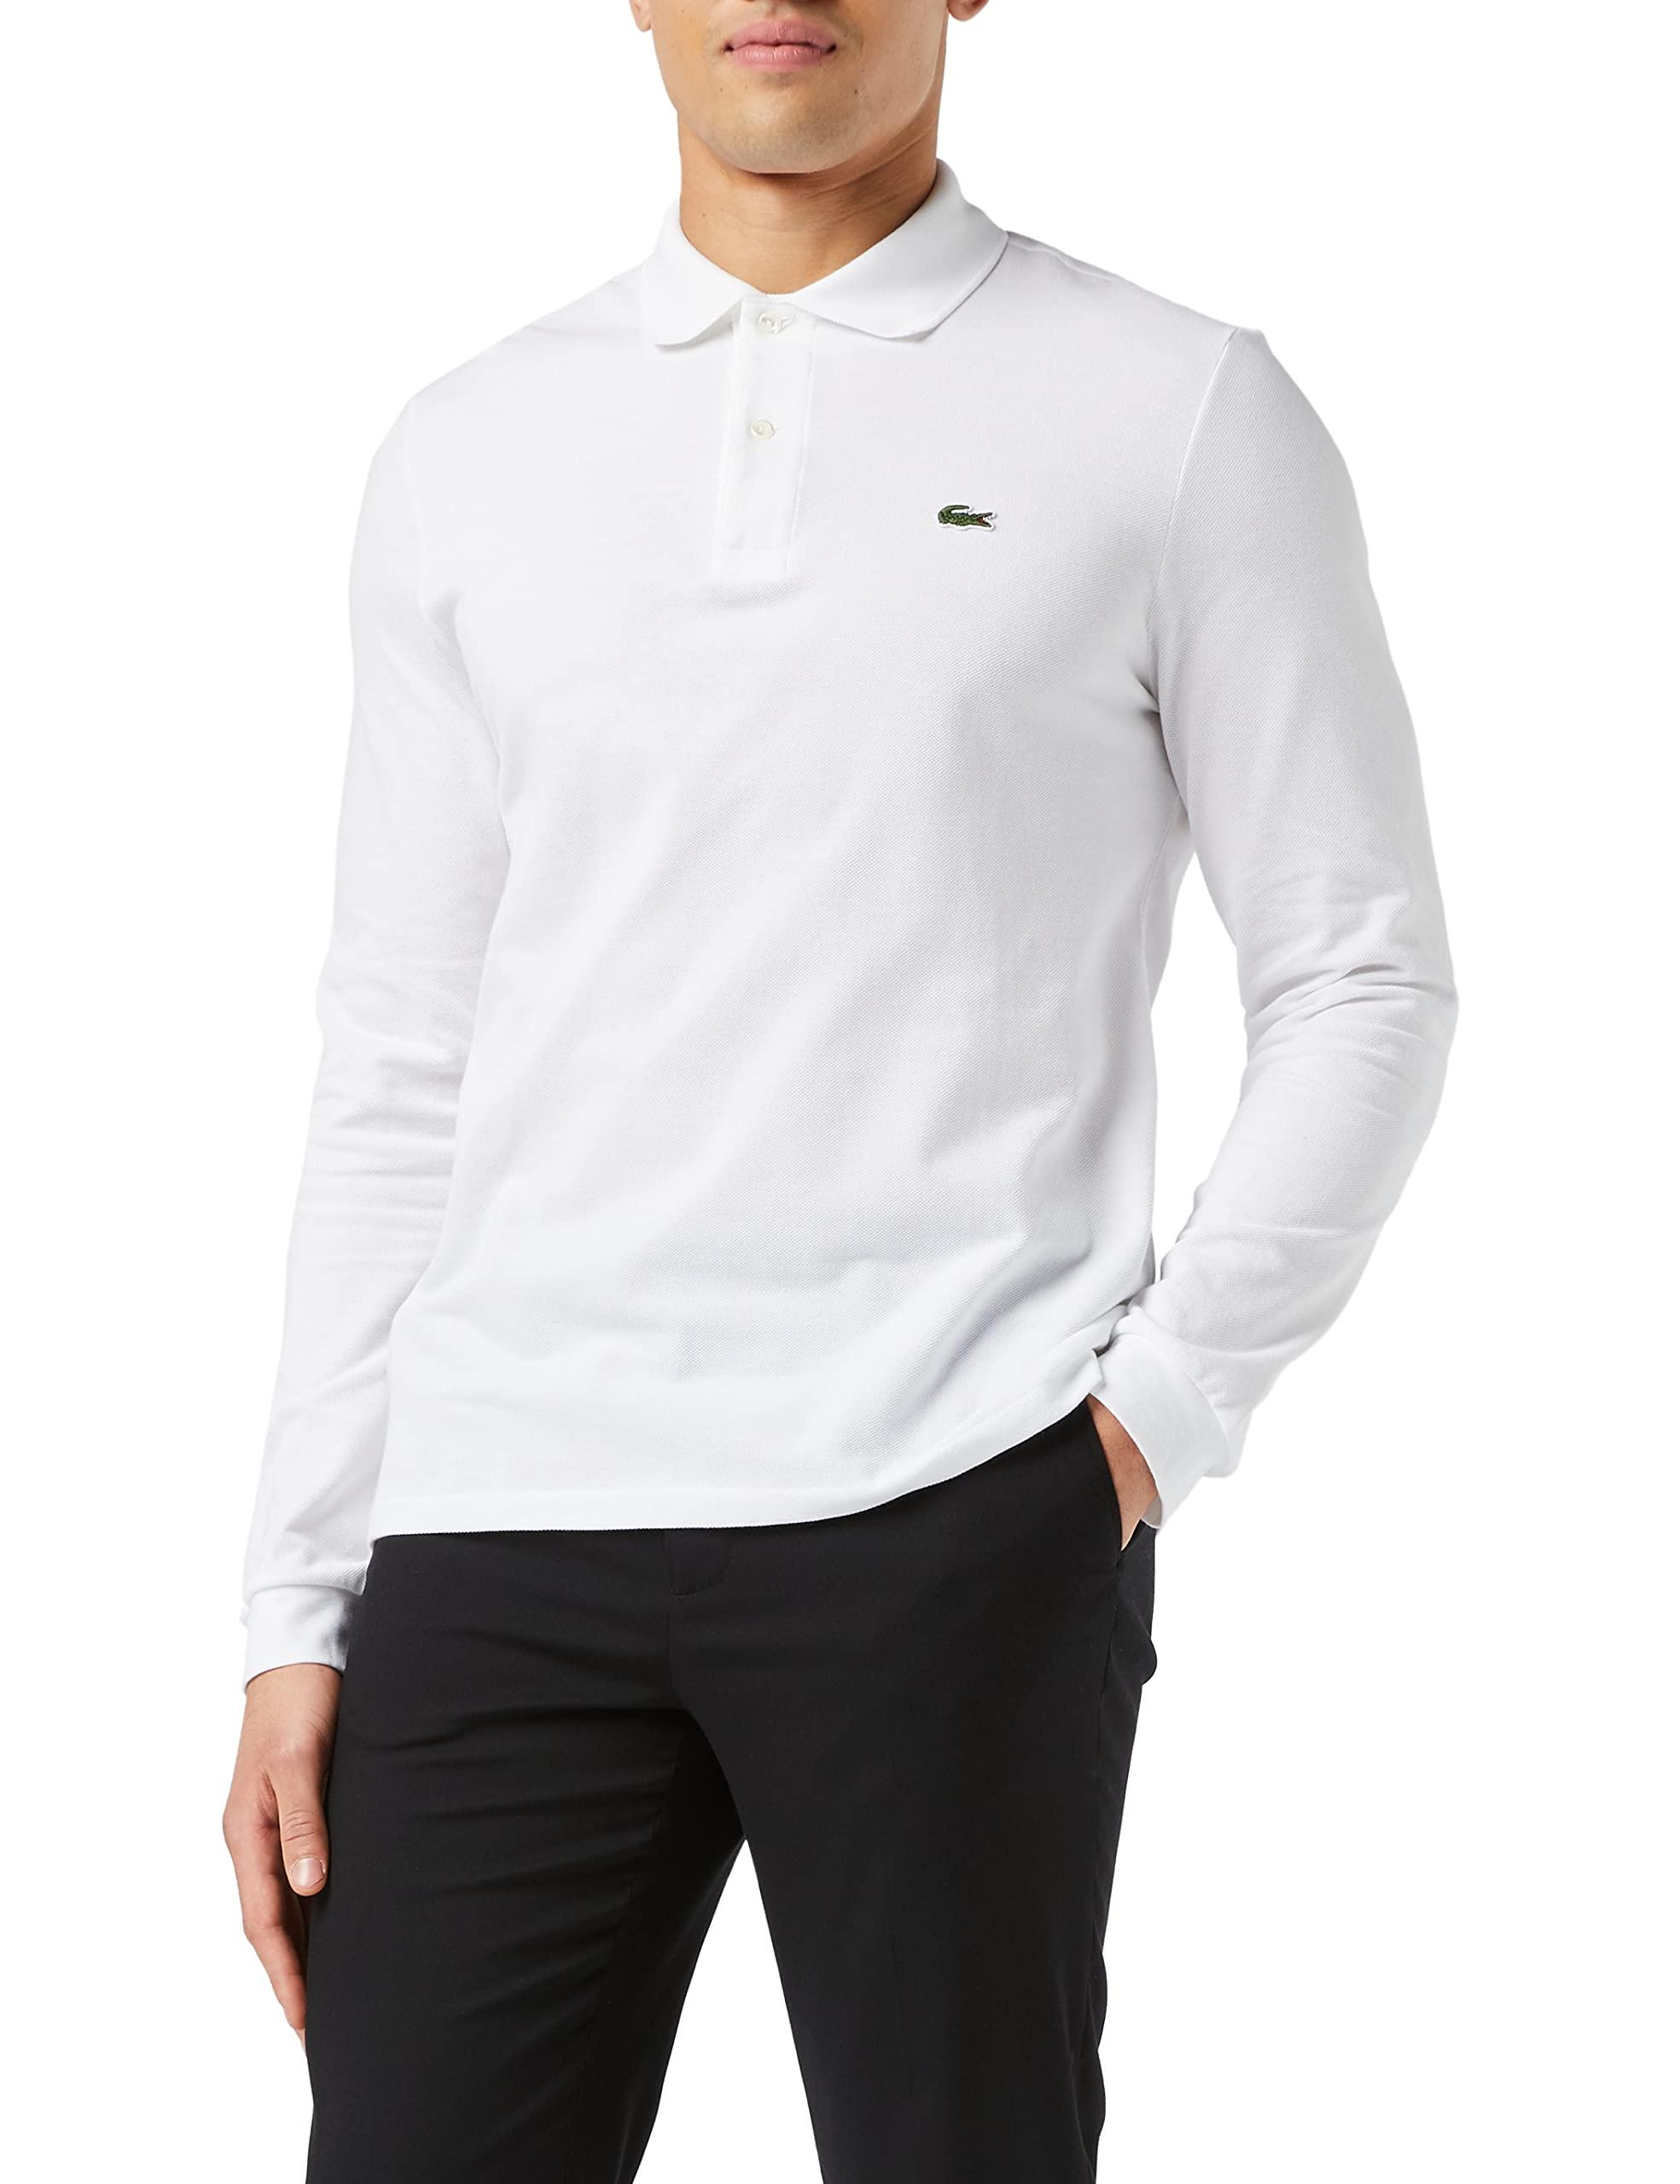 Lacoste Cotton Long Sleeve Classic Pique Polo Shirt in Bordeaux (White) for  Men - Save 37% - Lyst